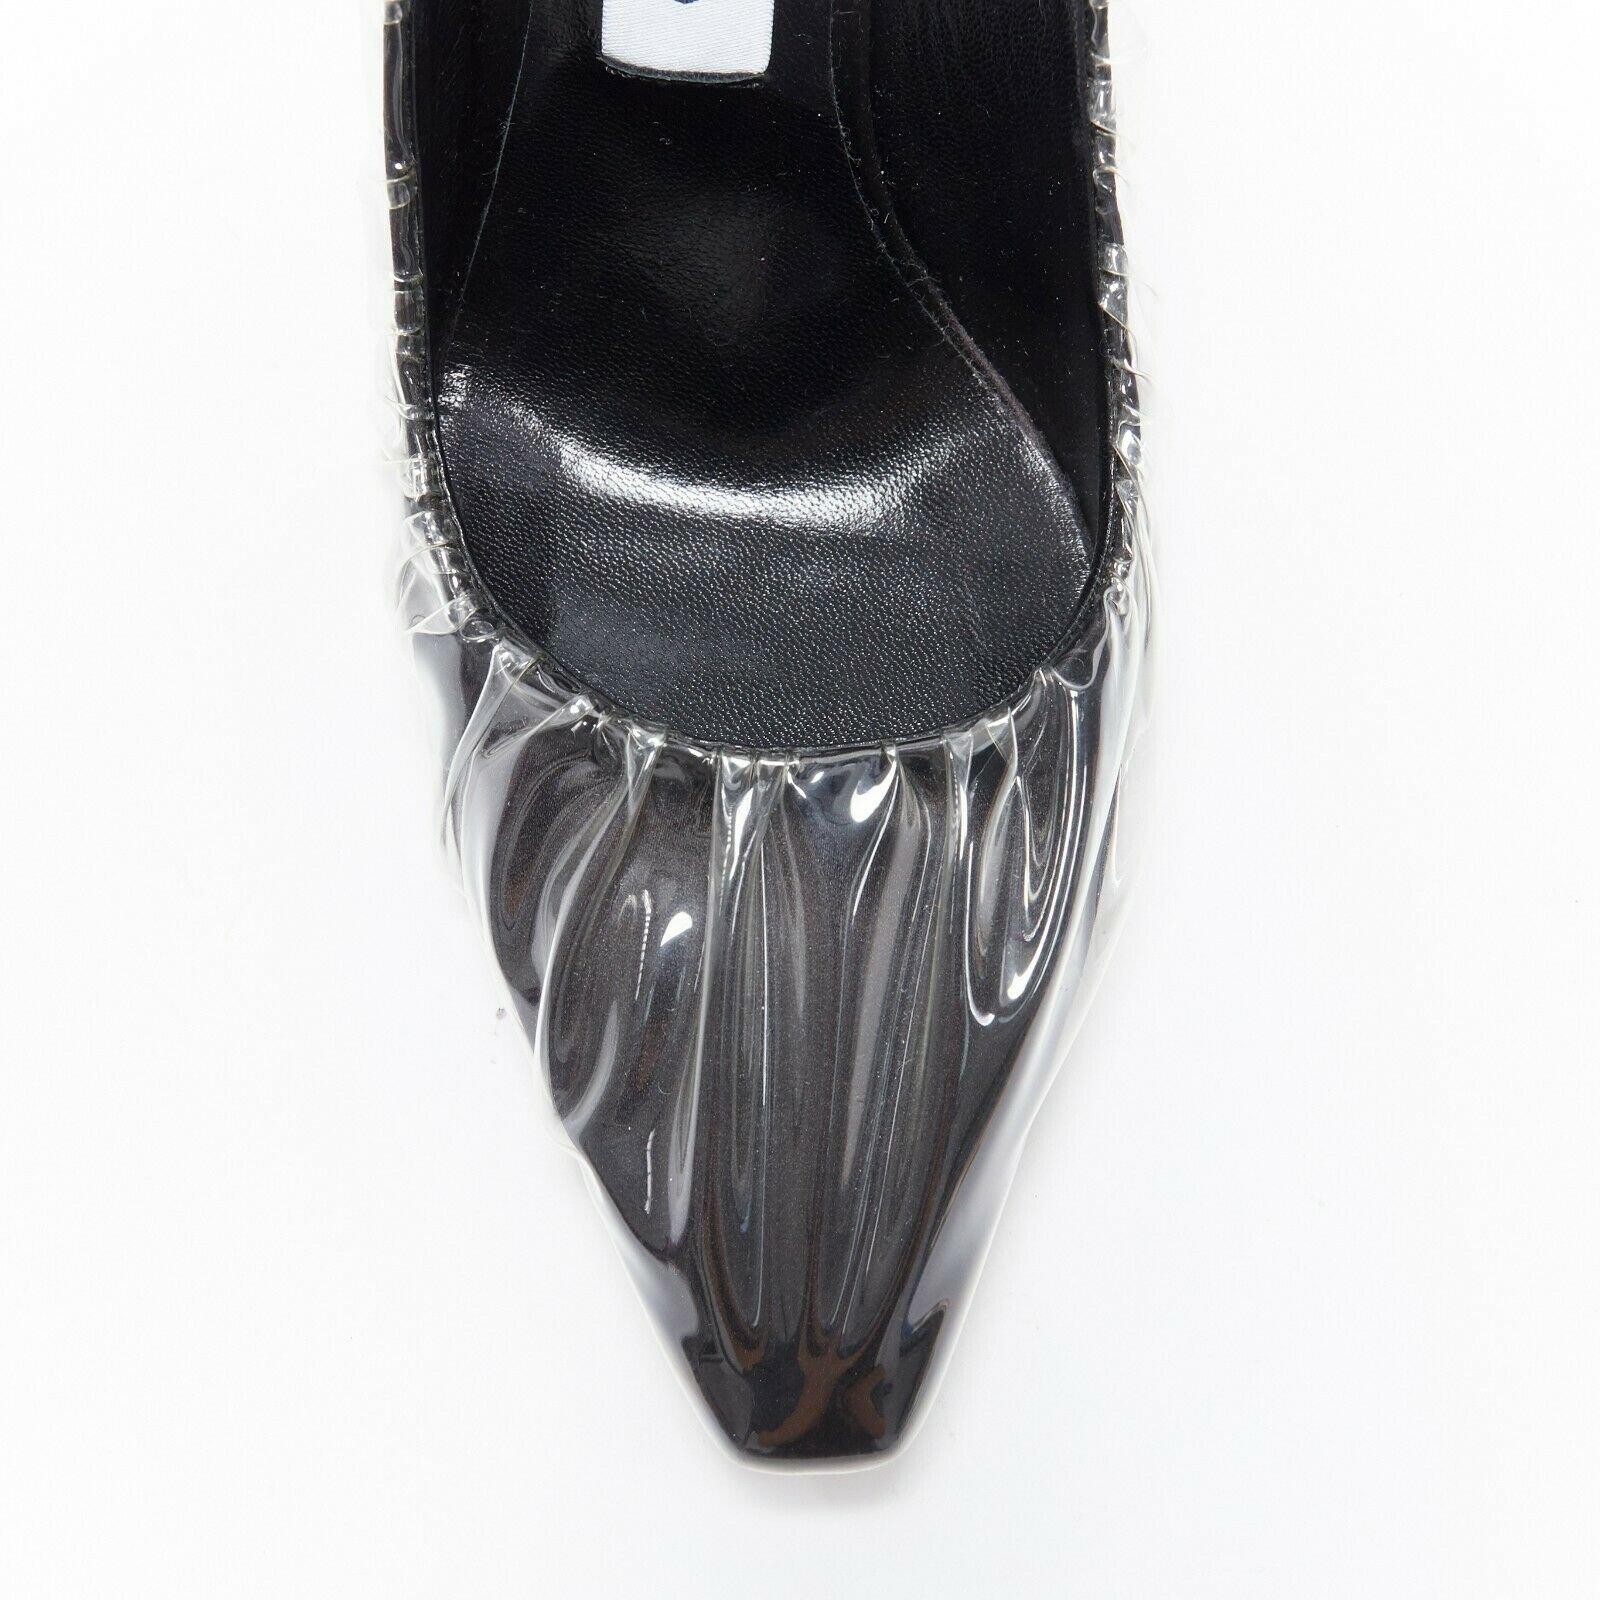 Black OFF-WHITE JIMMY CHOO black satin point transparent ruche high heel shoes EU38 For Sale